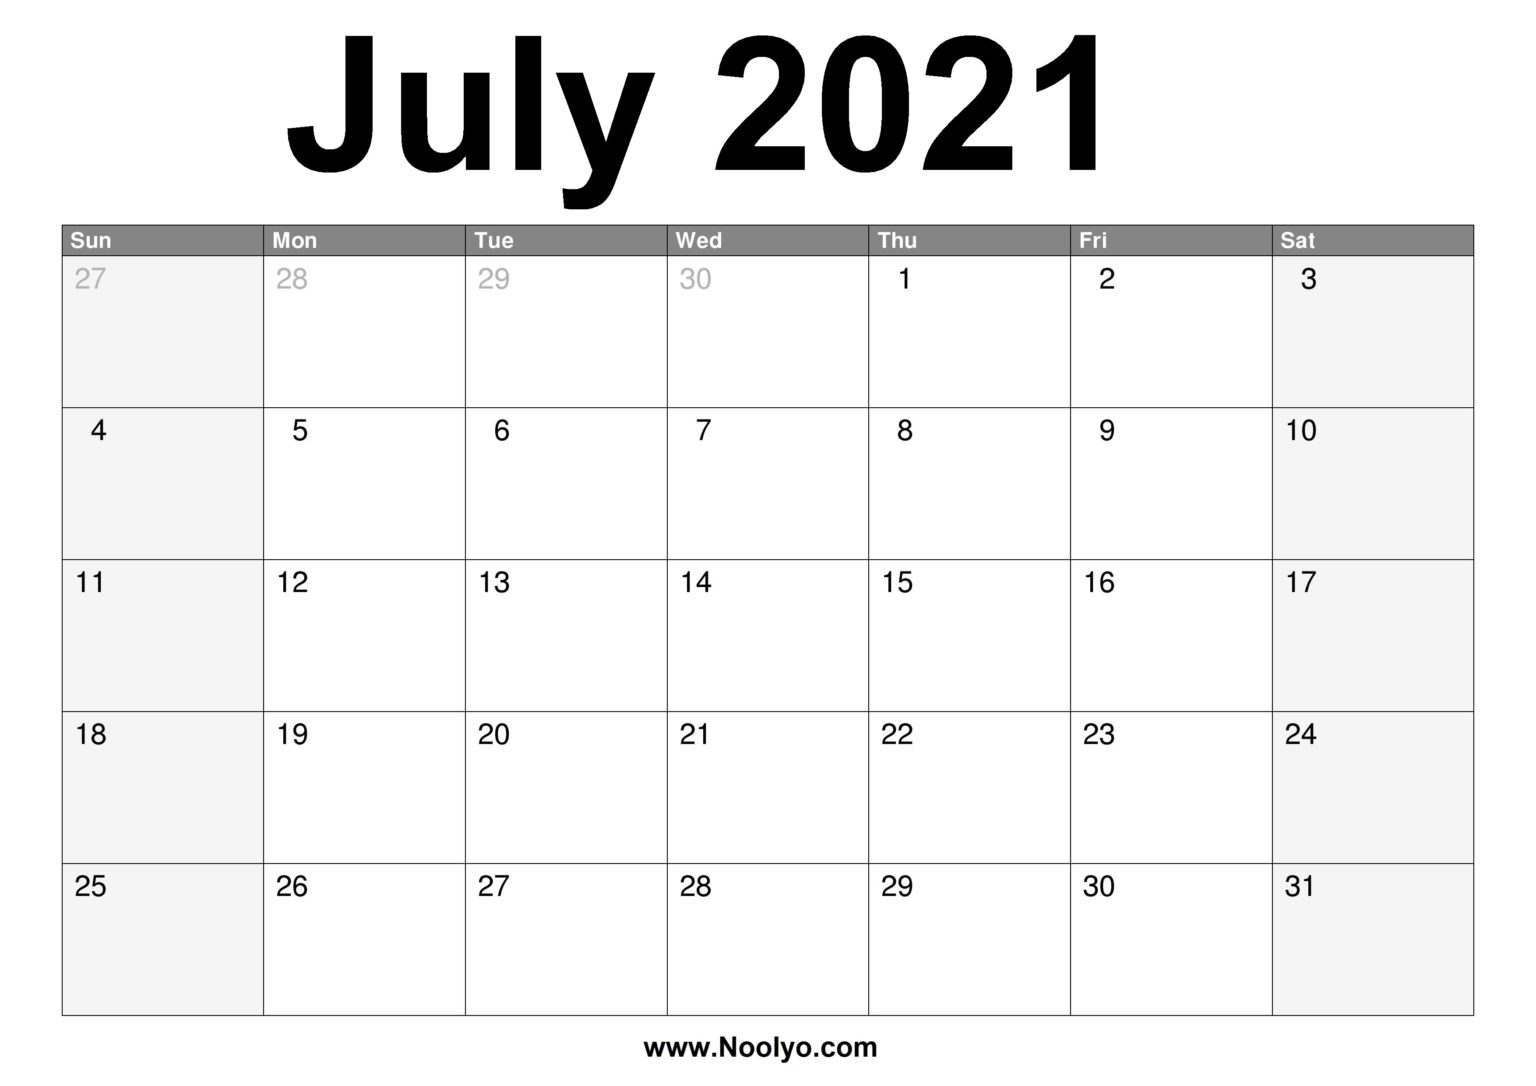 july-2021-calendar-printable-free-download-noolyo